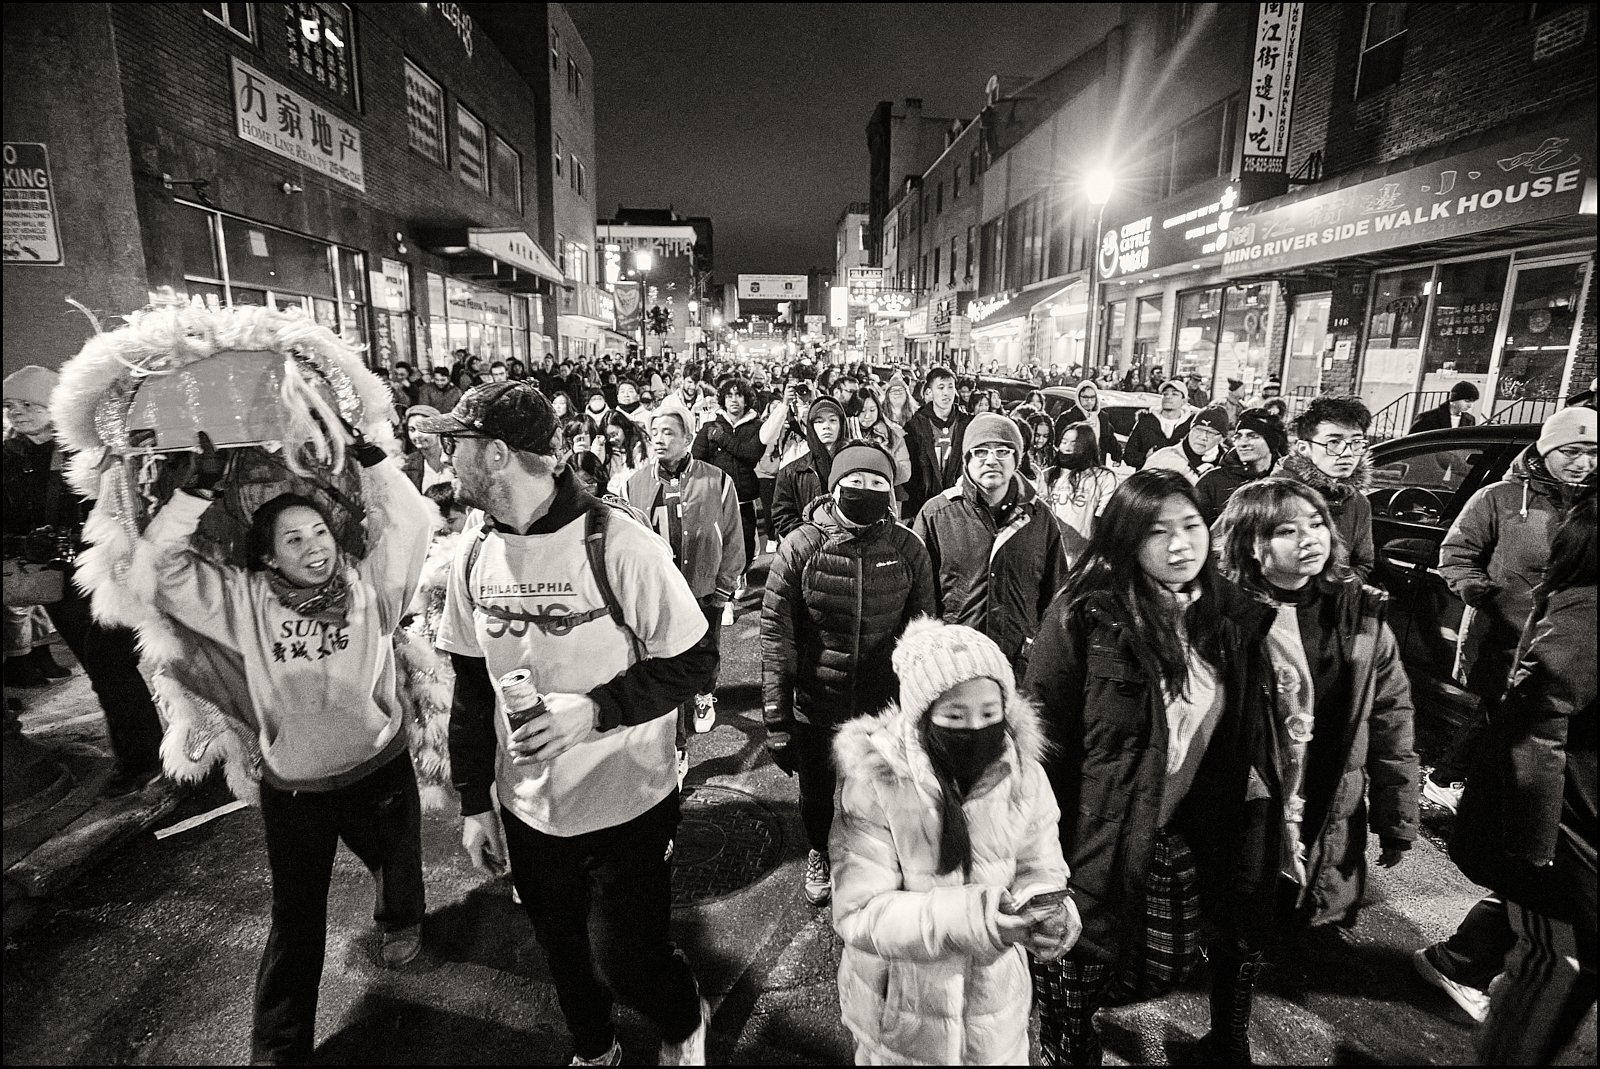 March thru Philadelphia's Chinatown during Lunar Year's Eve